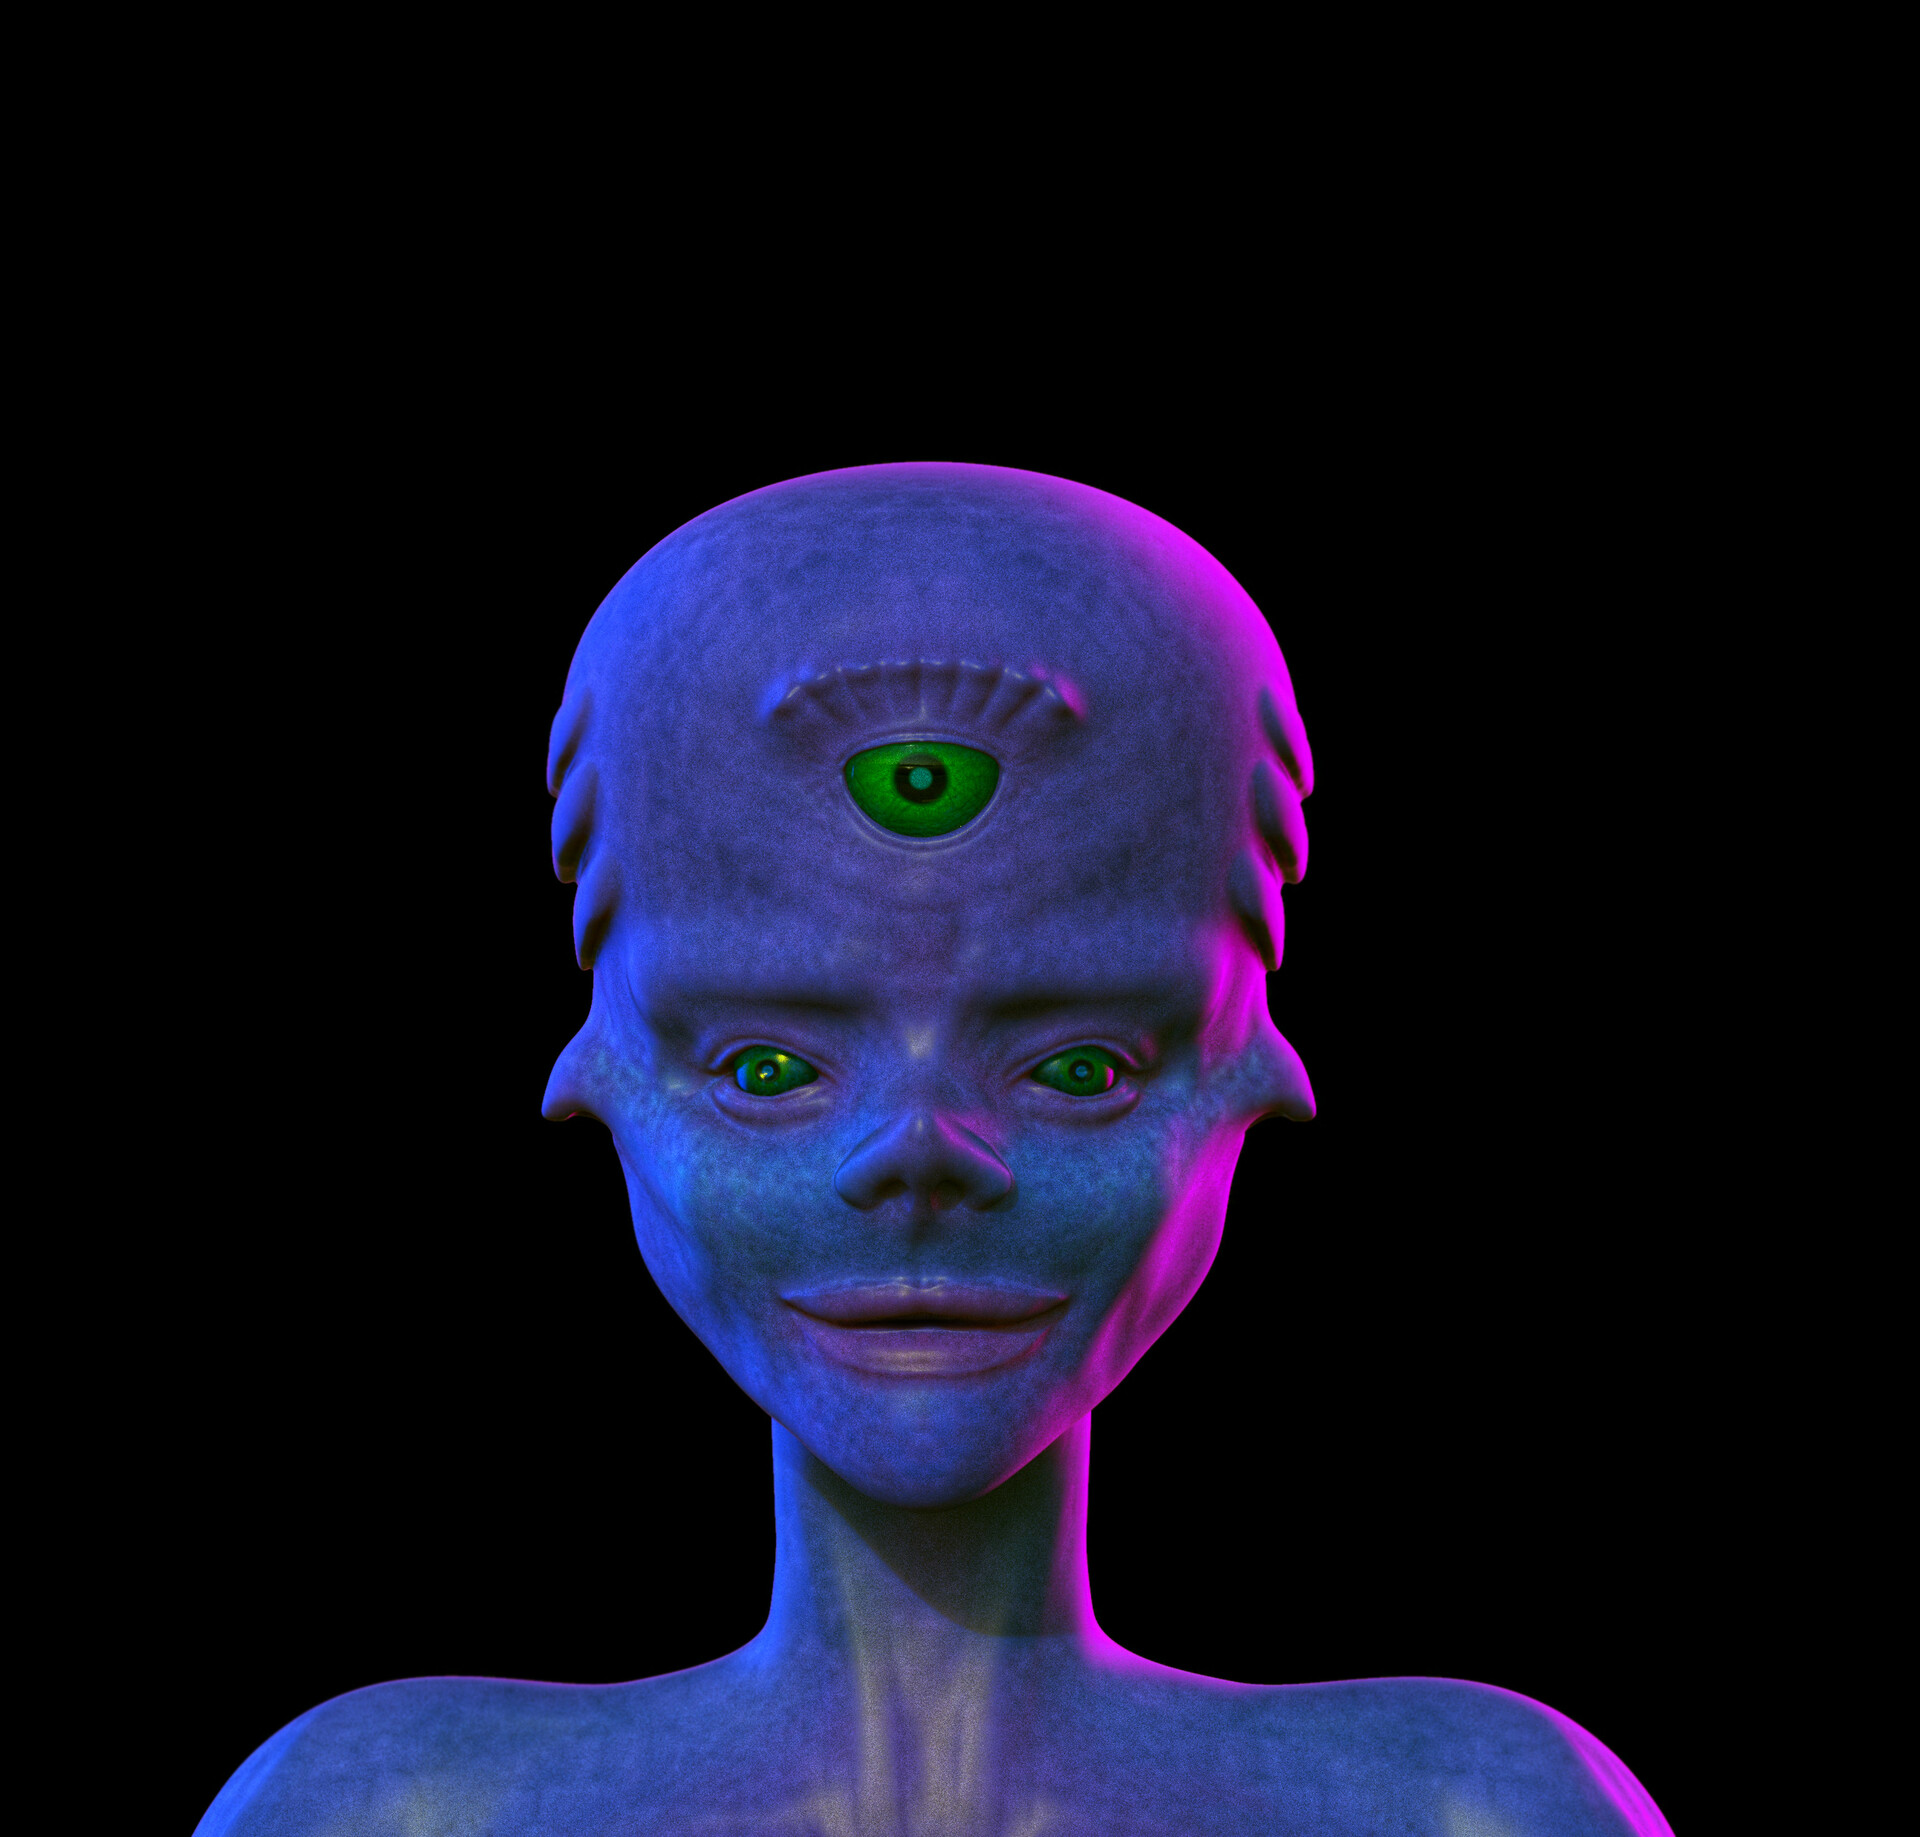 ArtStation - Alien Concept